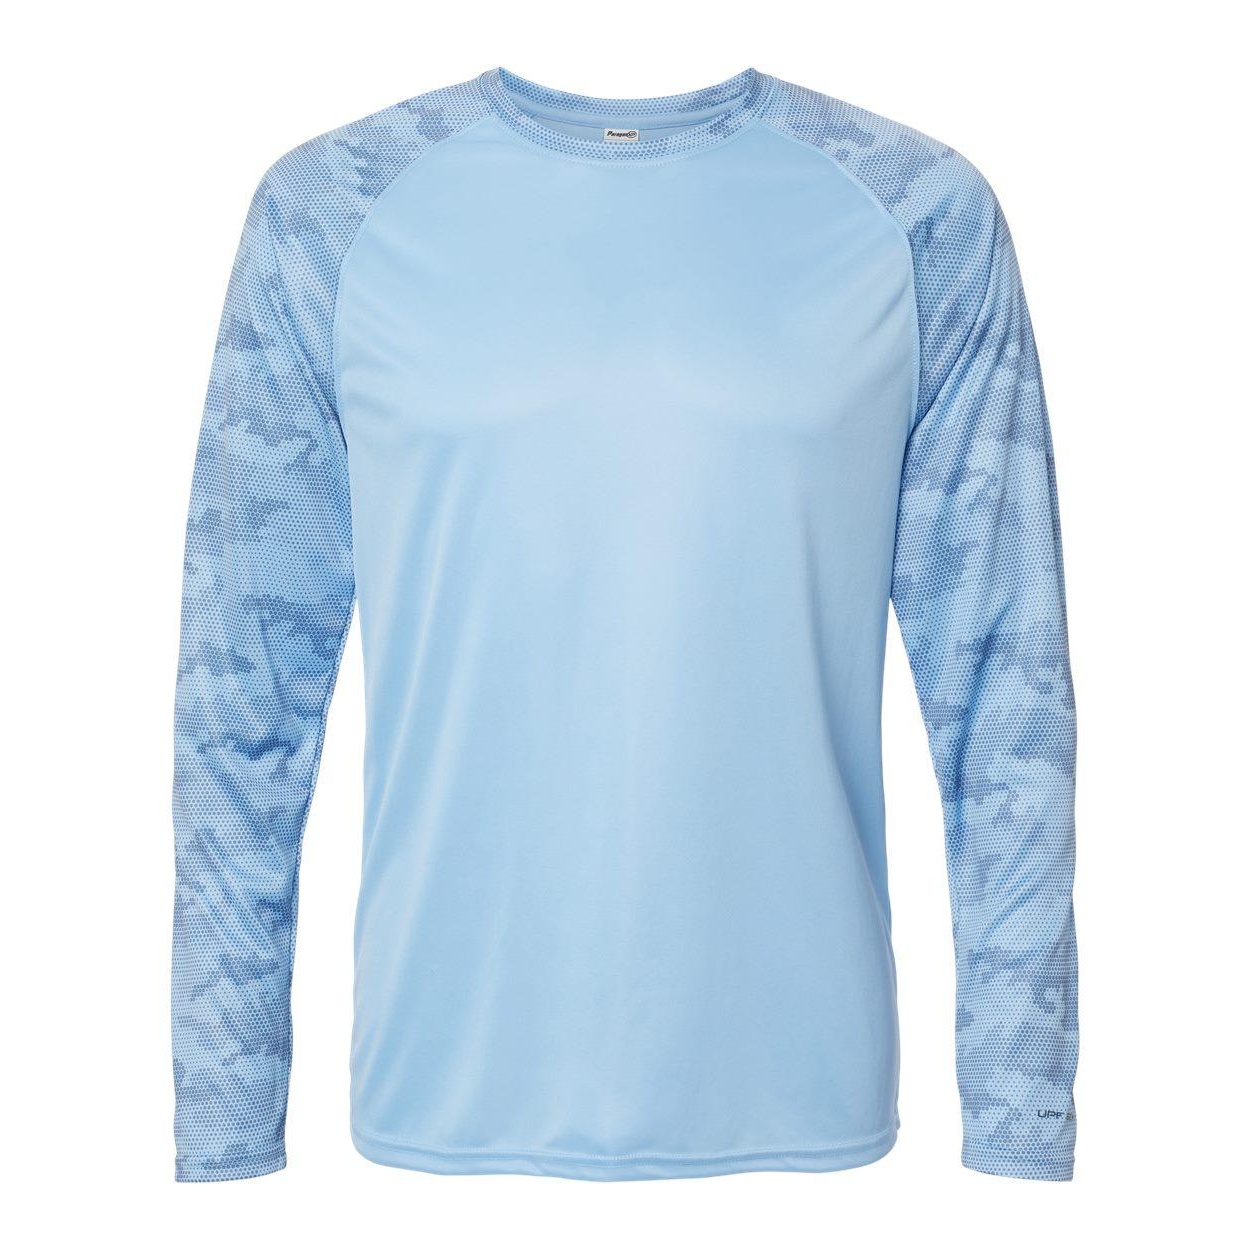 Paragon Cayman Performance Camo Colorblocked Long Sleeve T-Shirt